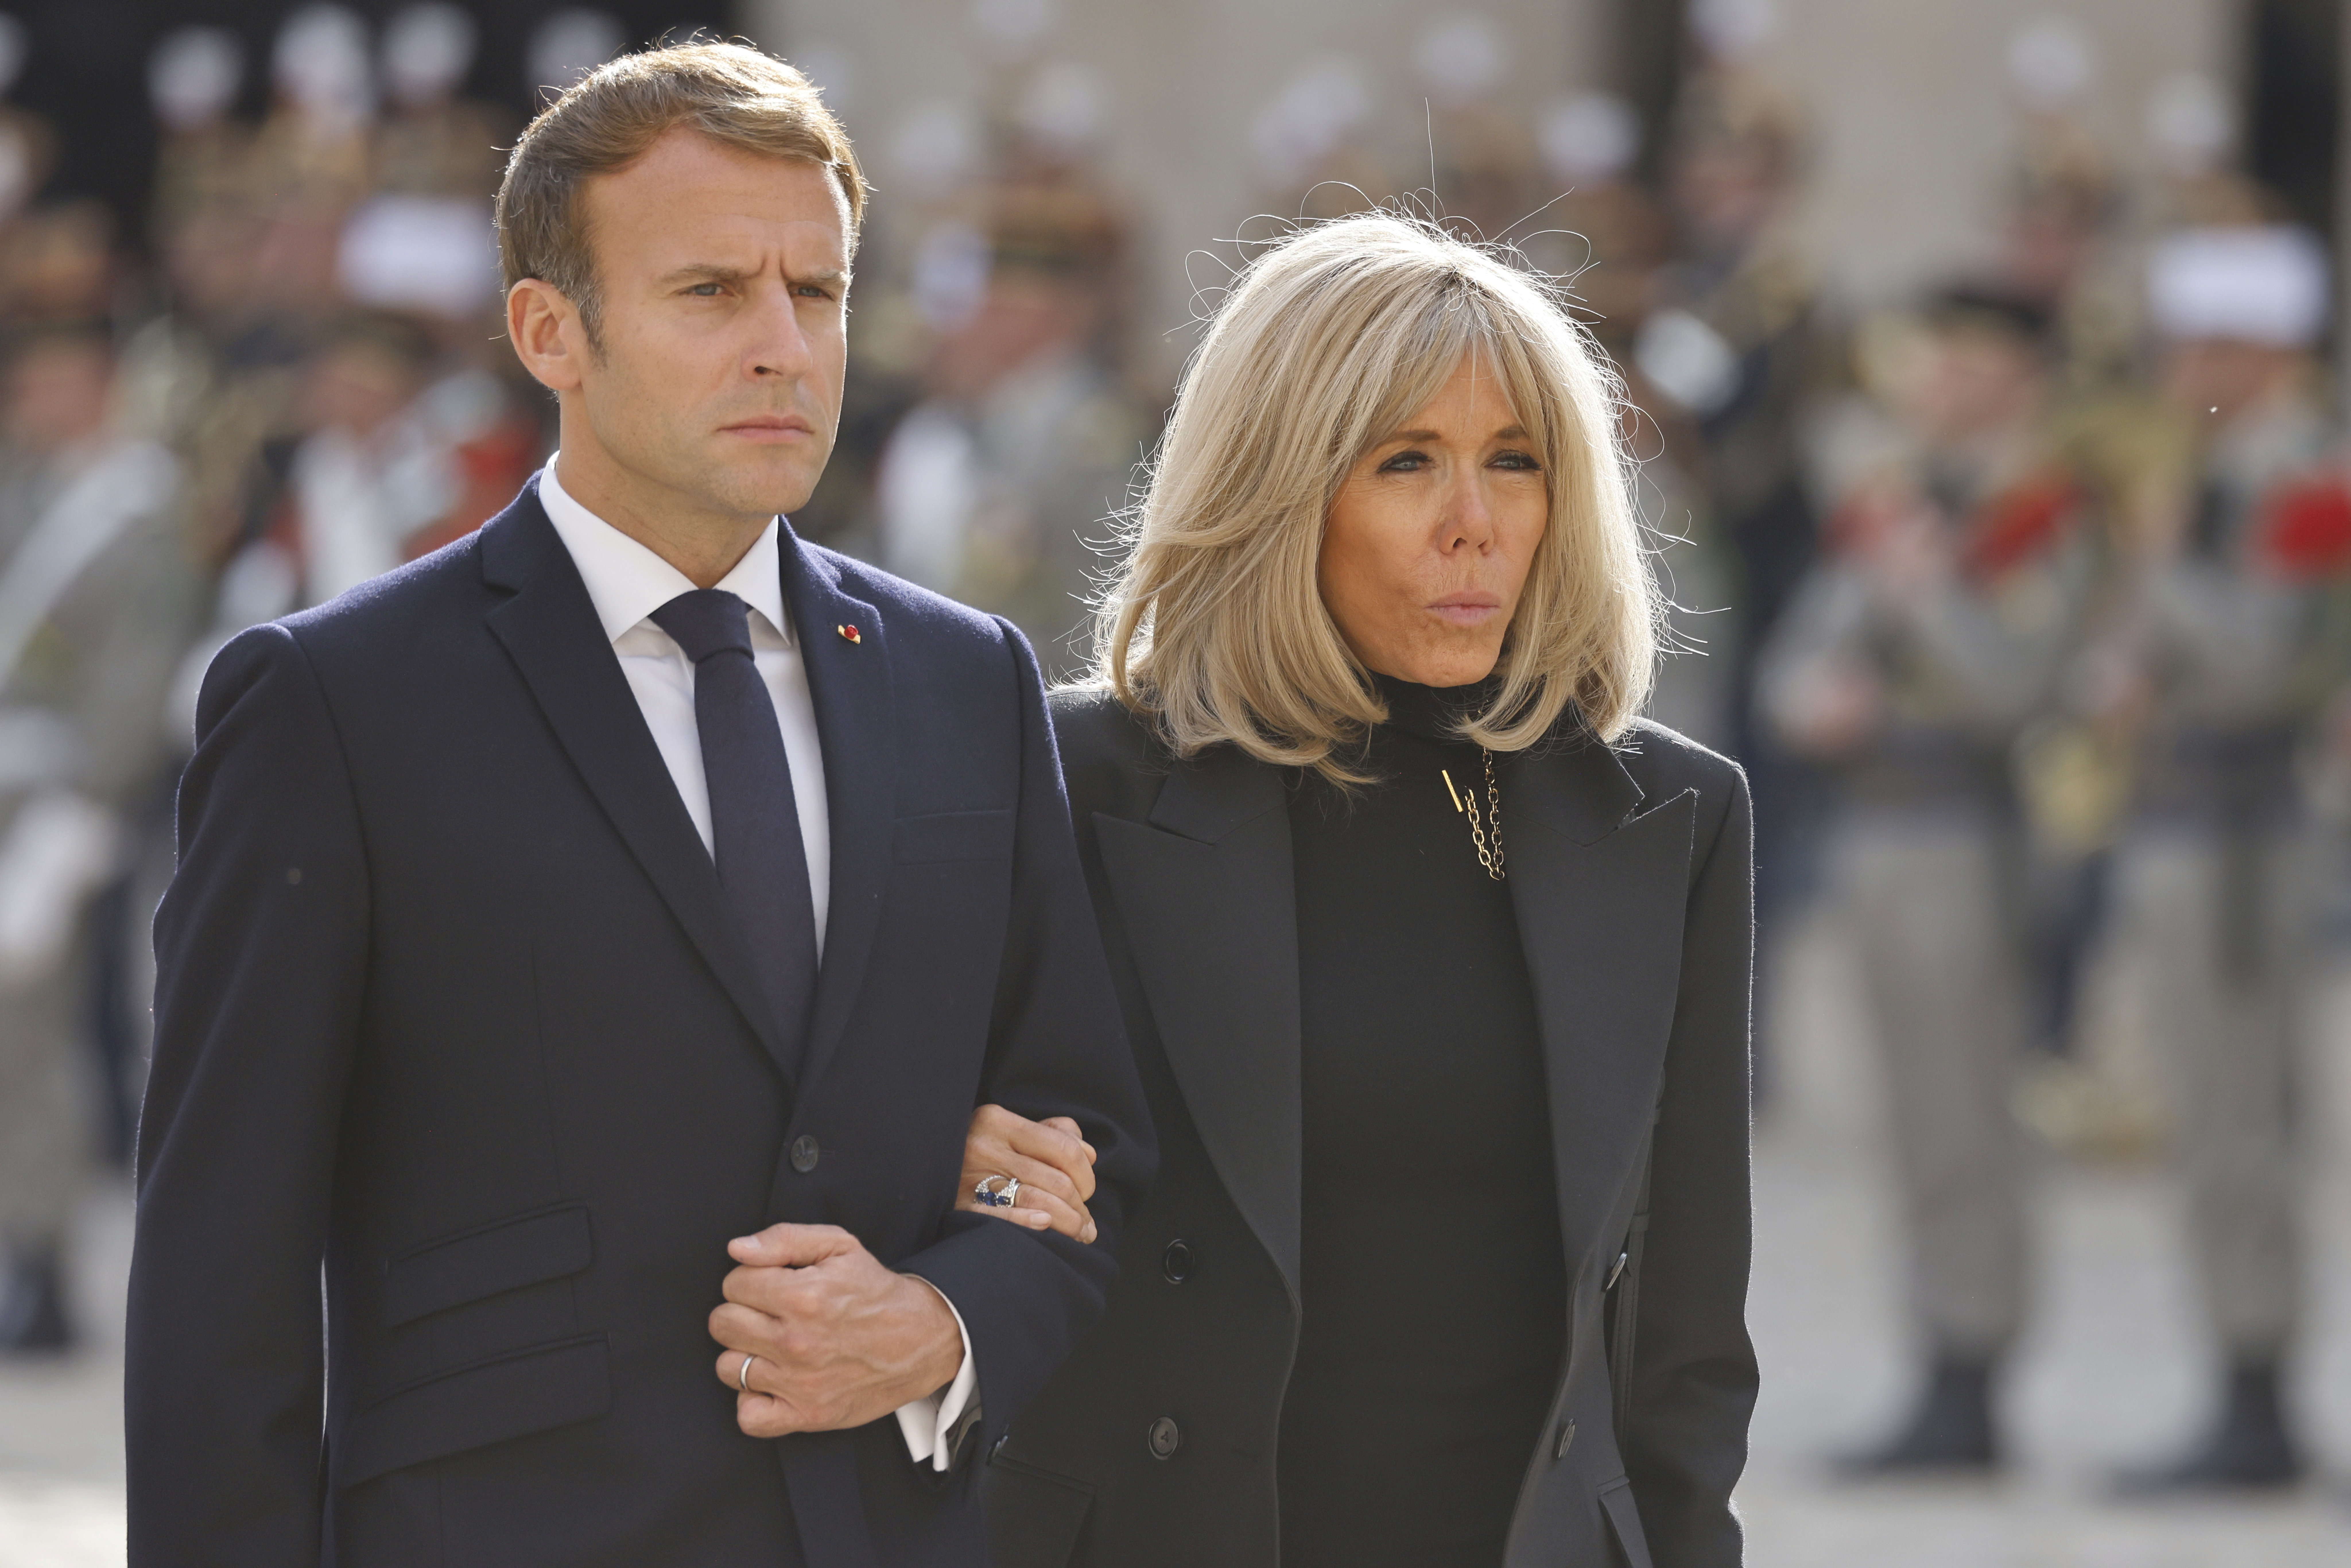 Фото жены макрона президента франции сейчас и в молодости